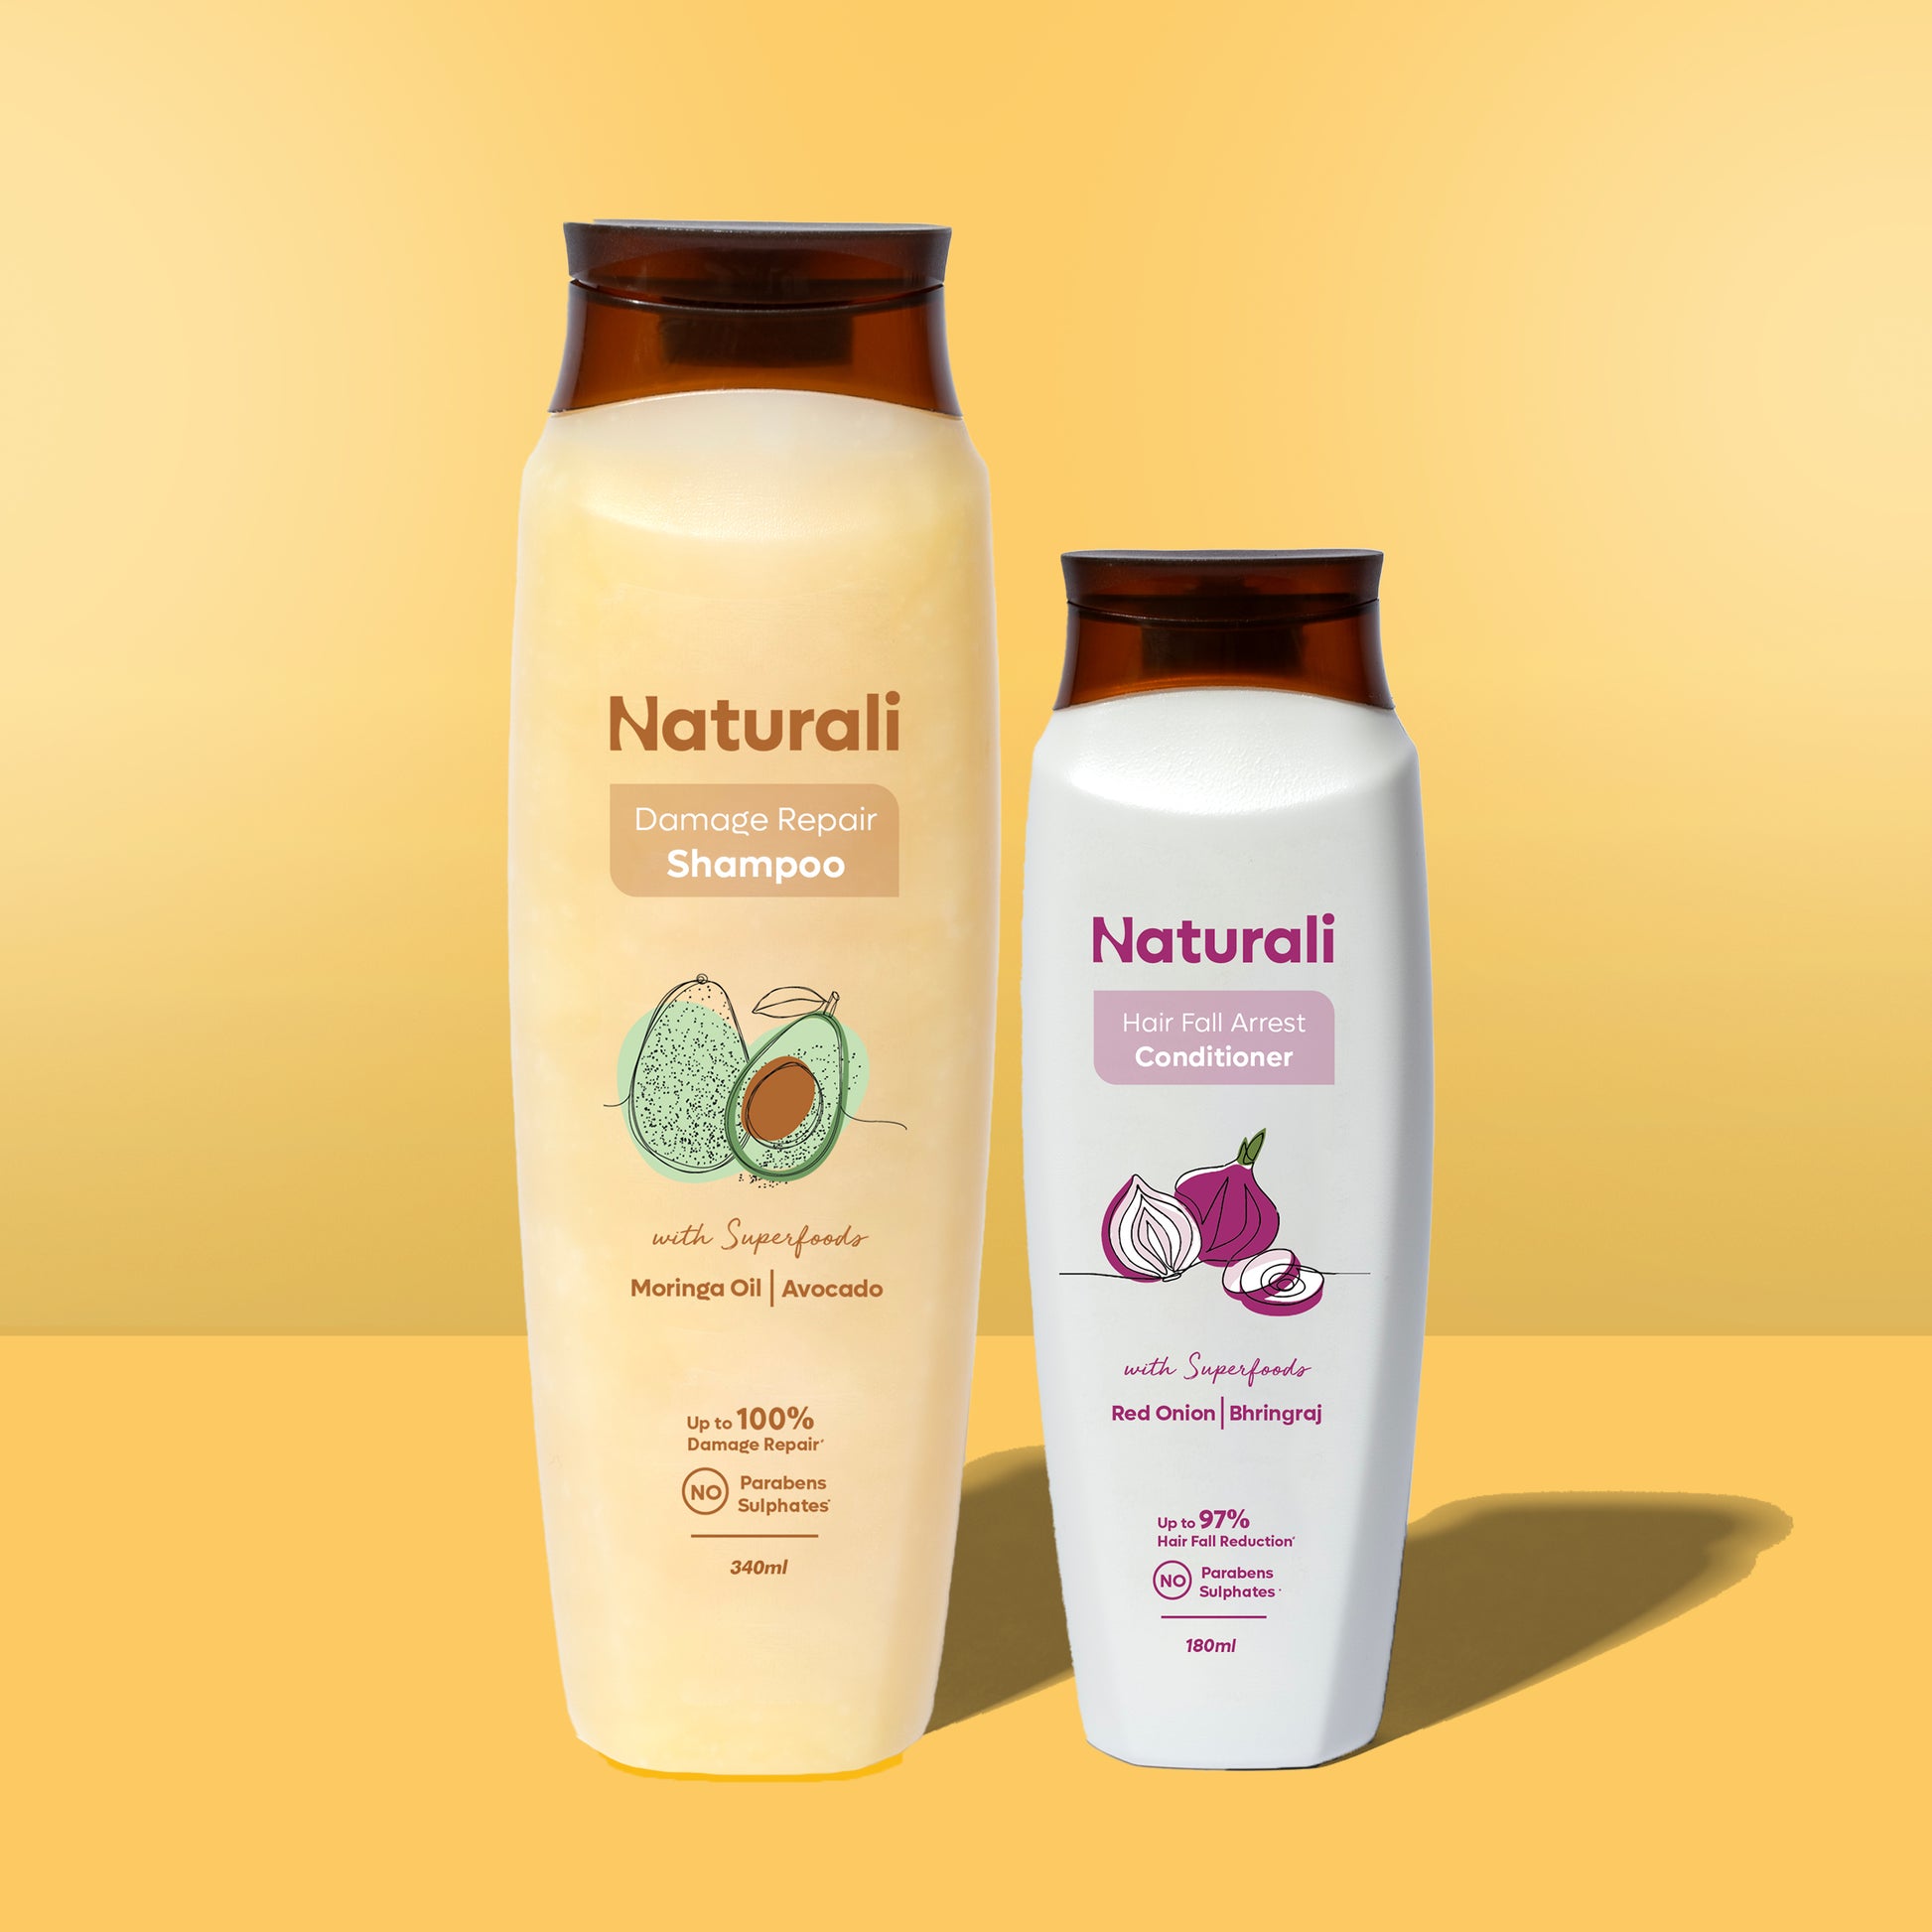 Naturali Damage Repair Shampoo + Hair Fall Arrest Conditioner